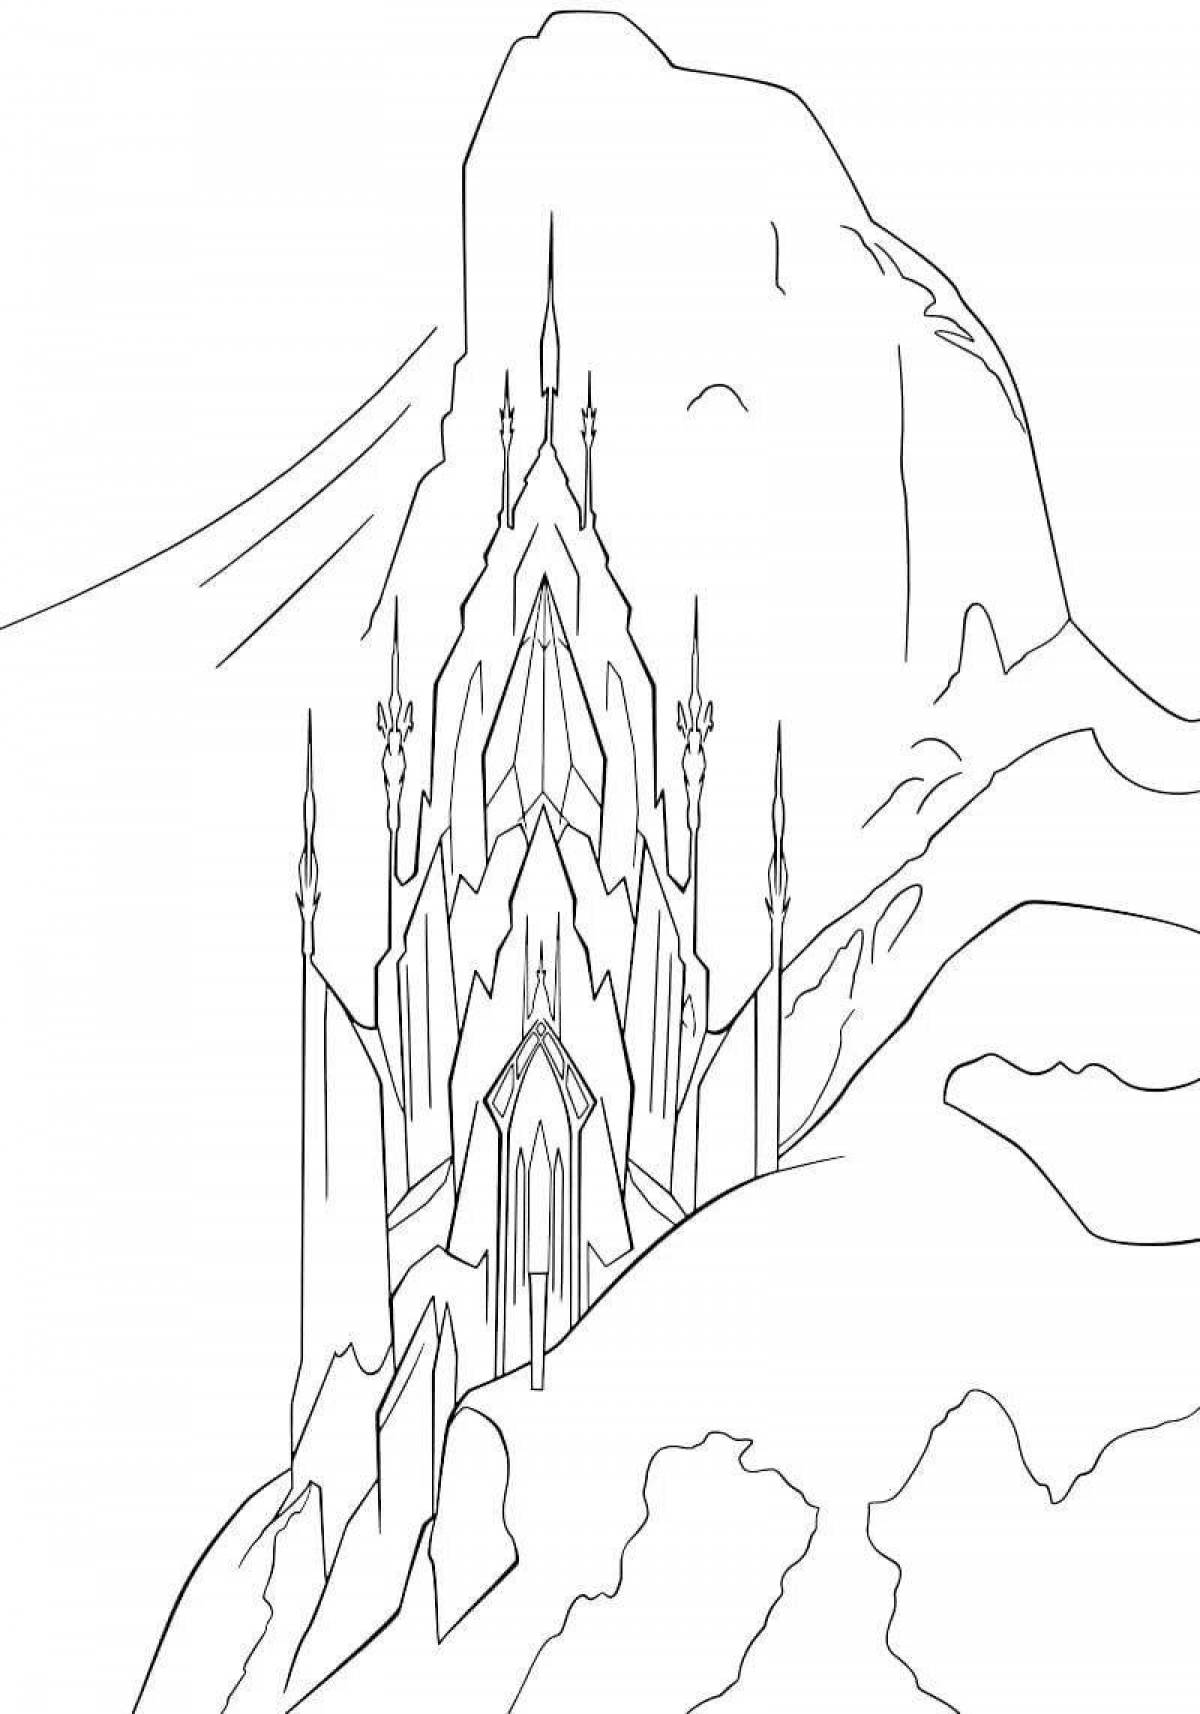 Coloring book the snow queen's magic castle